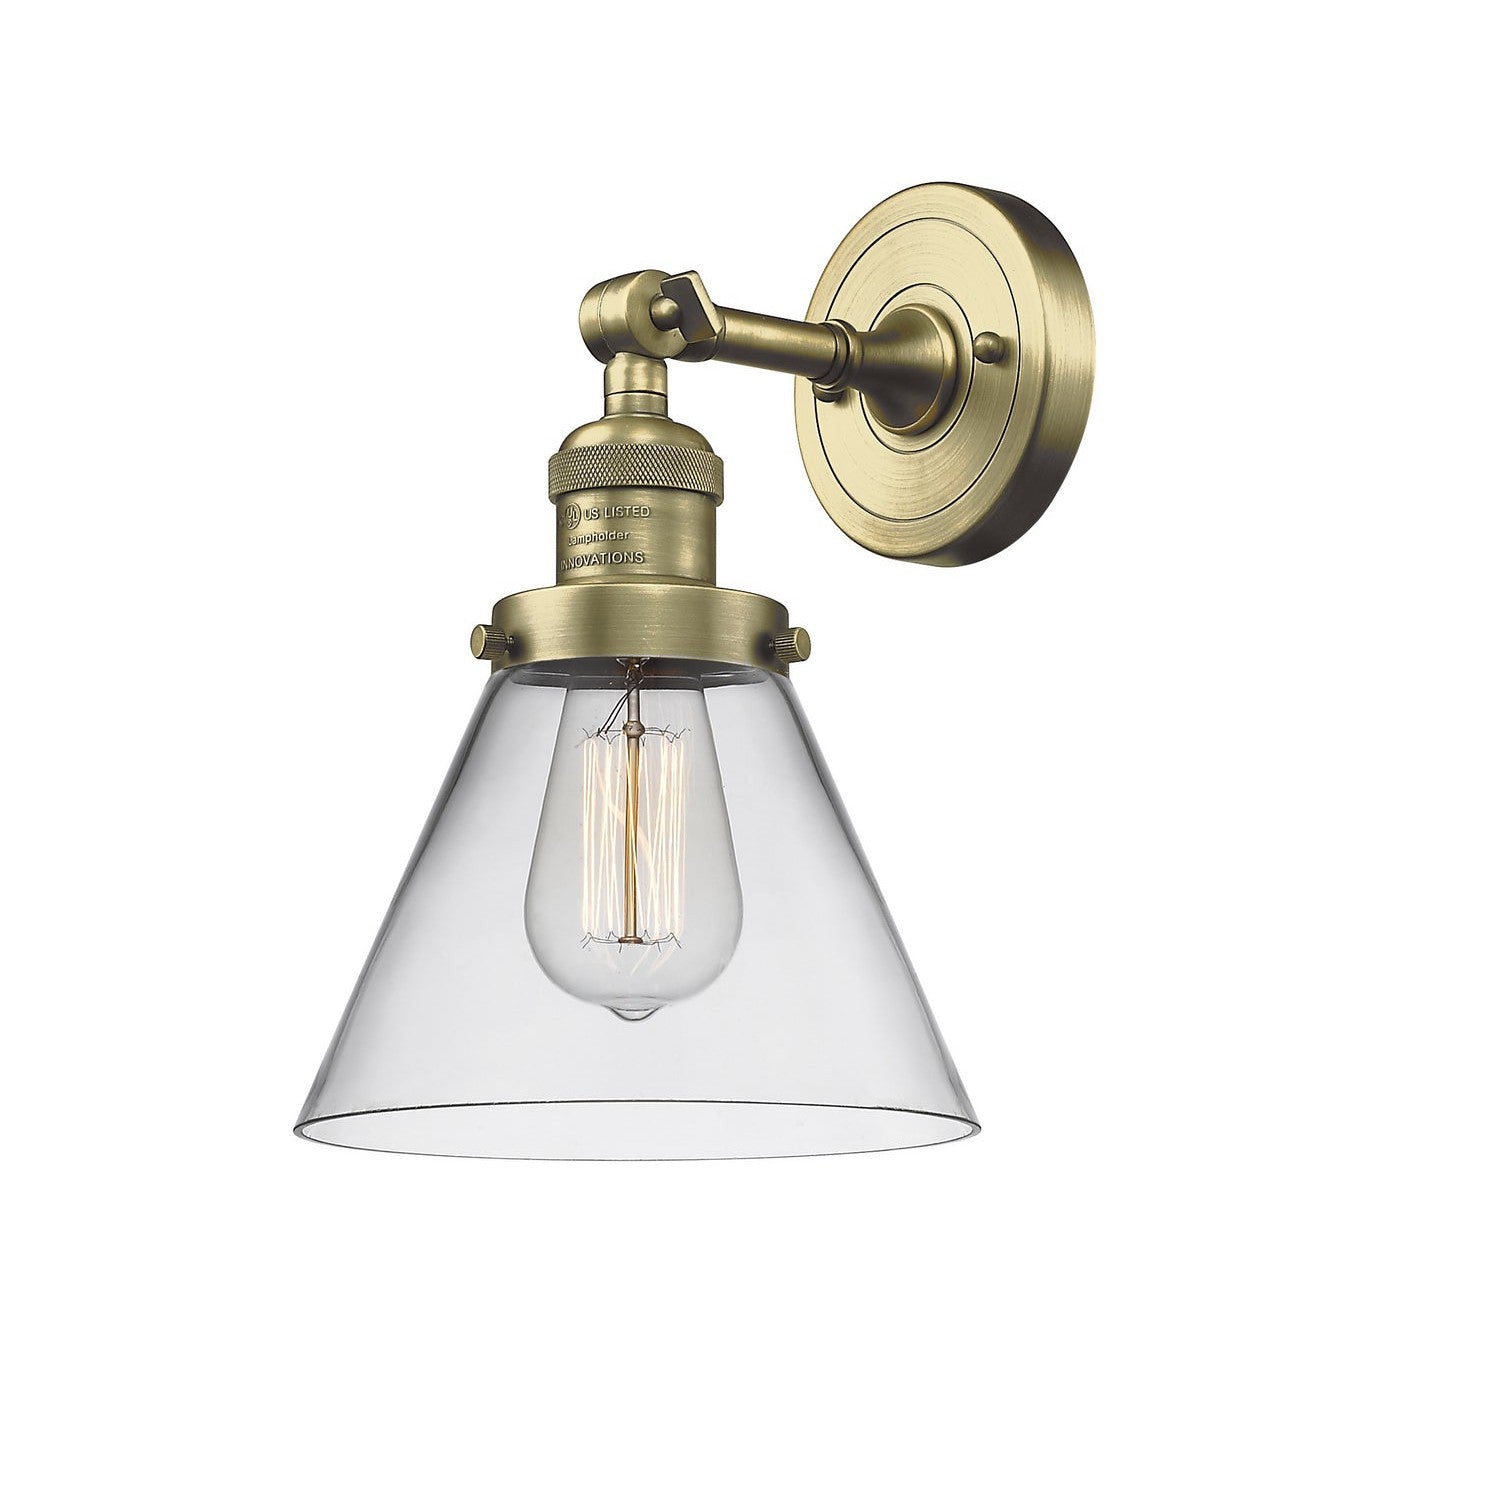 Innovations Franklin Restoration 203-AB-G42-LED Wall Sconce Light - Antique Brass